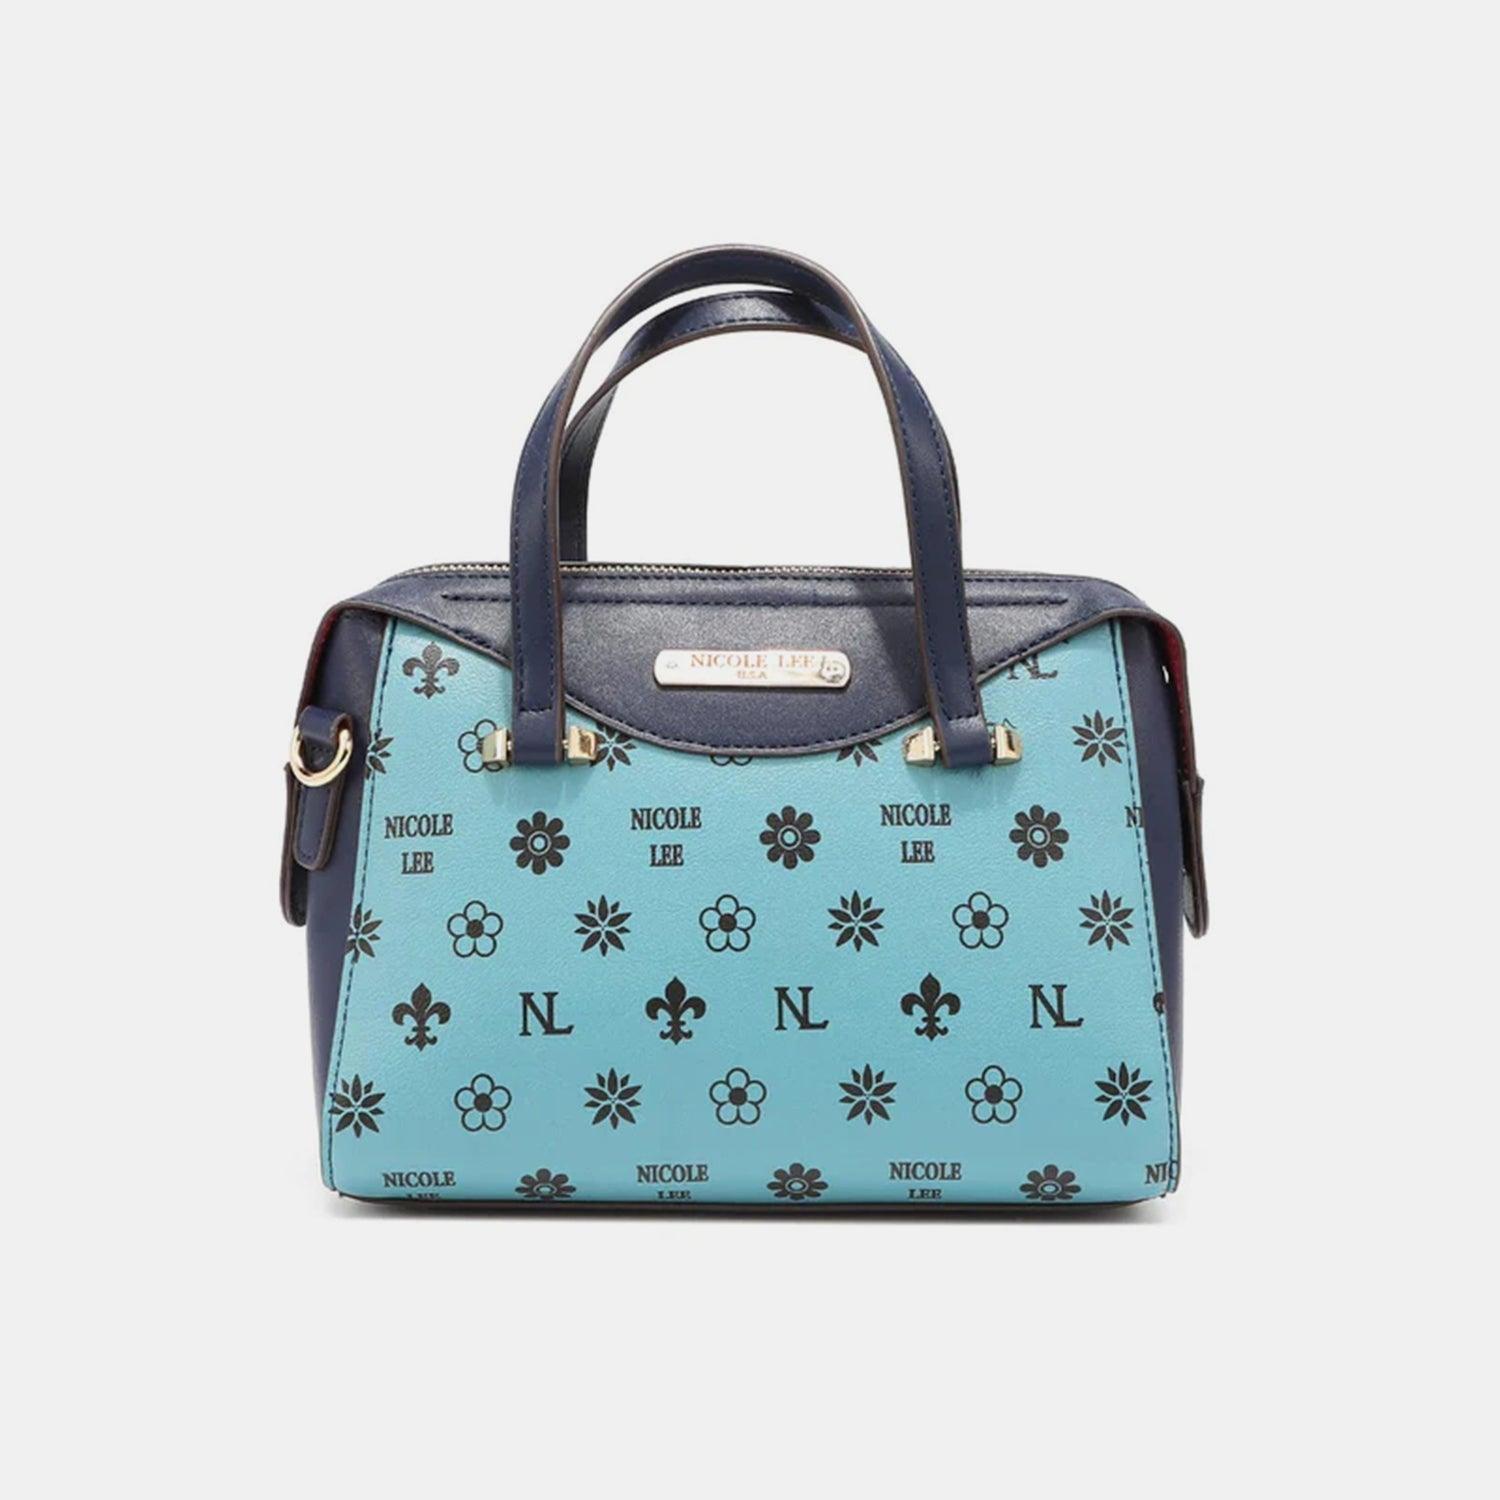 a blue handbag with a flower pattern on it